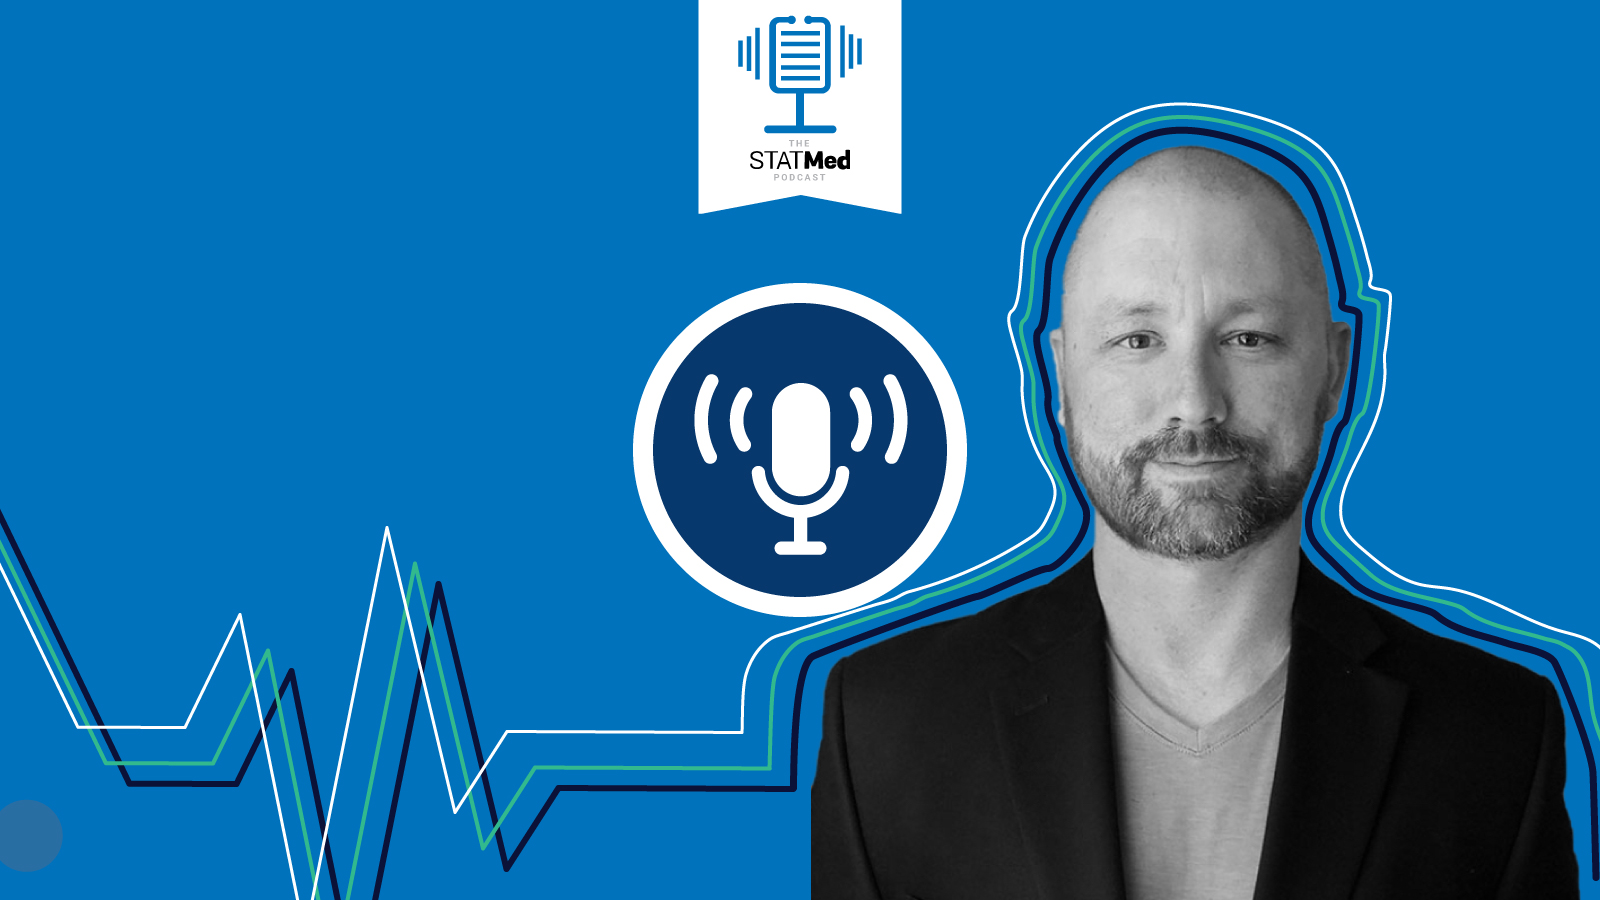 Podcast host Ryan Orwig against a blue background